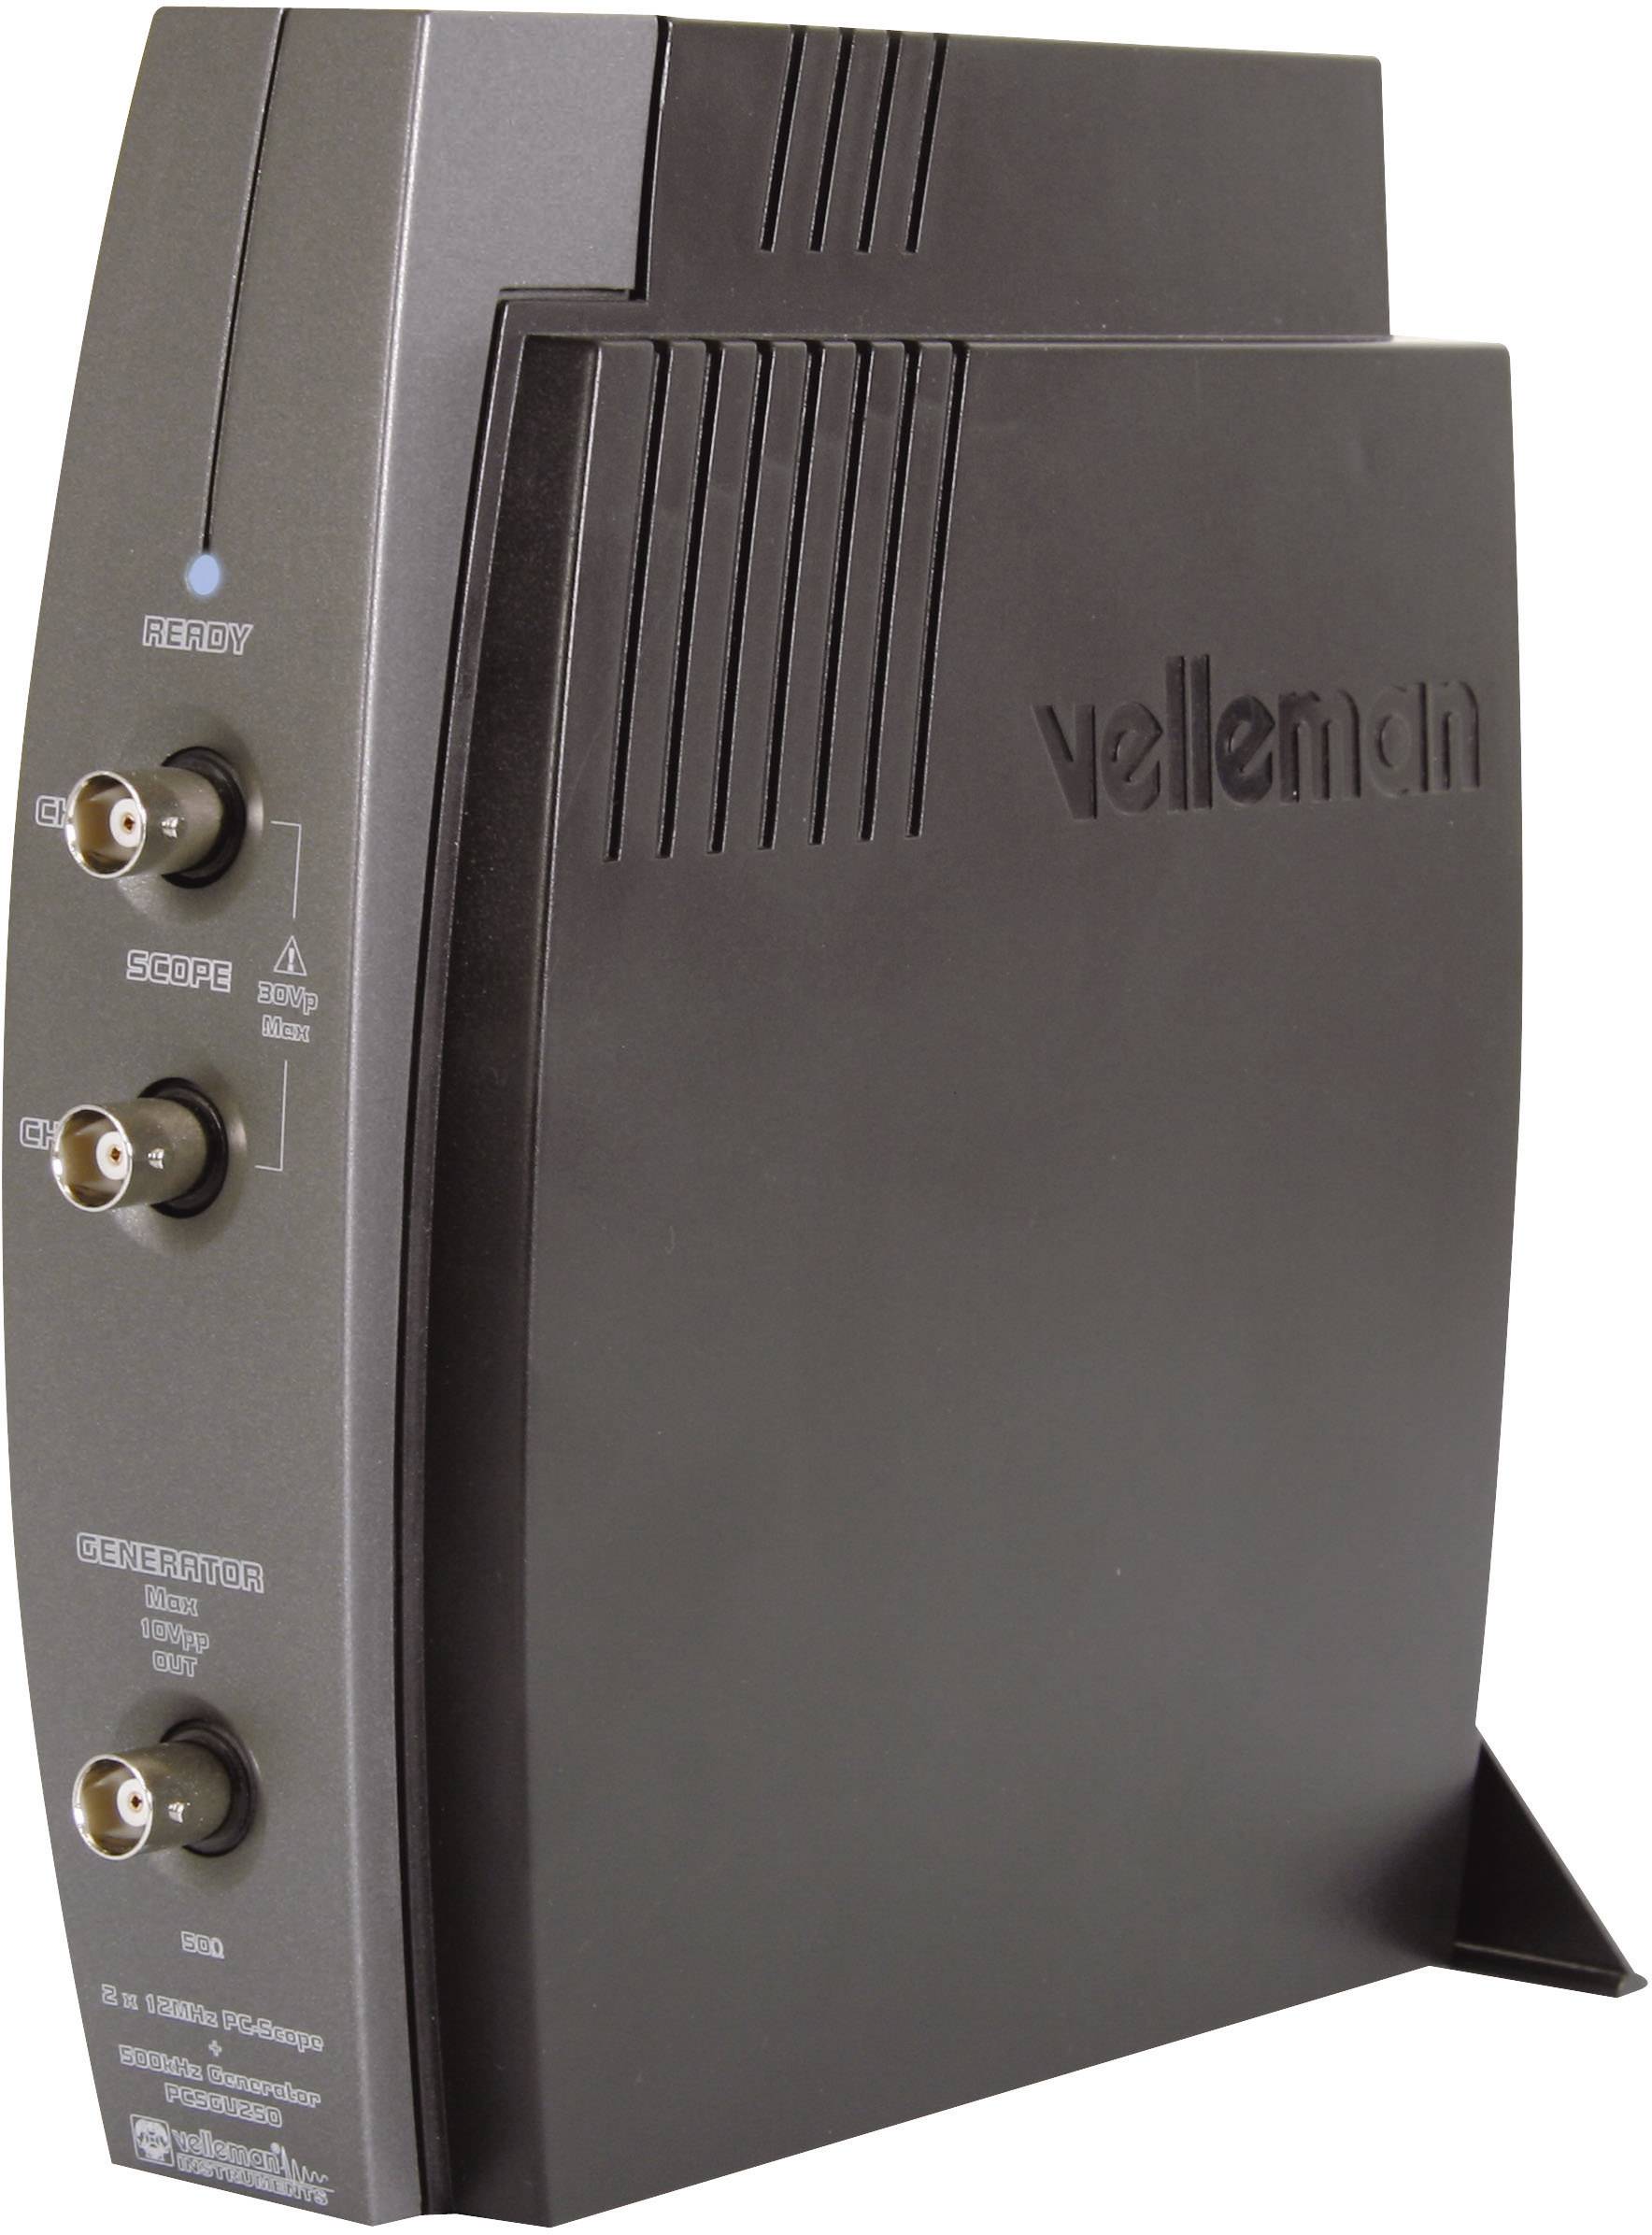 UK TIN-YAEN Digital Storage Oscilloscope Multimeters 2 Channel Handheld Full Touch Generator Recorder Multimeter 50MHz Bandwidth AC100-240V UTD2052CL 